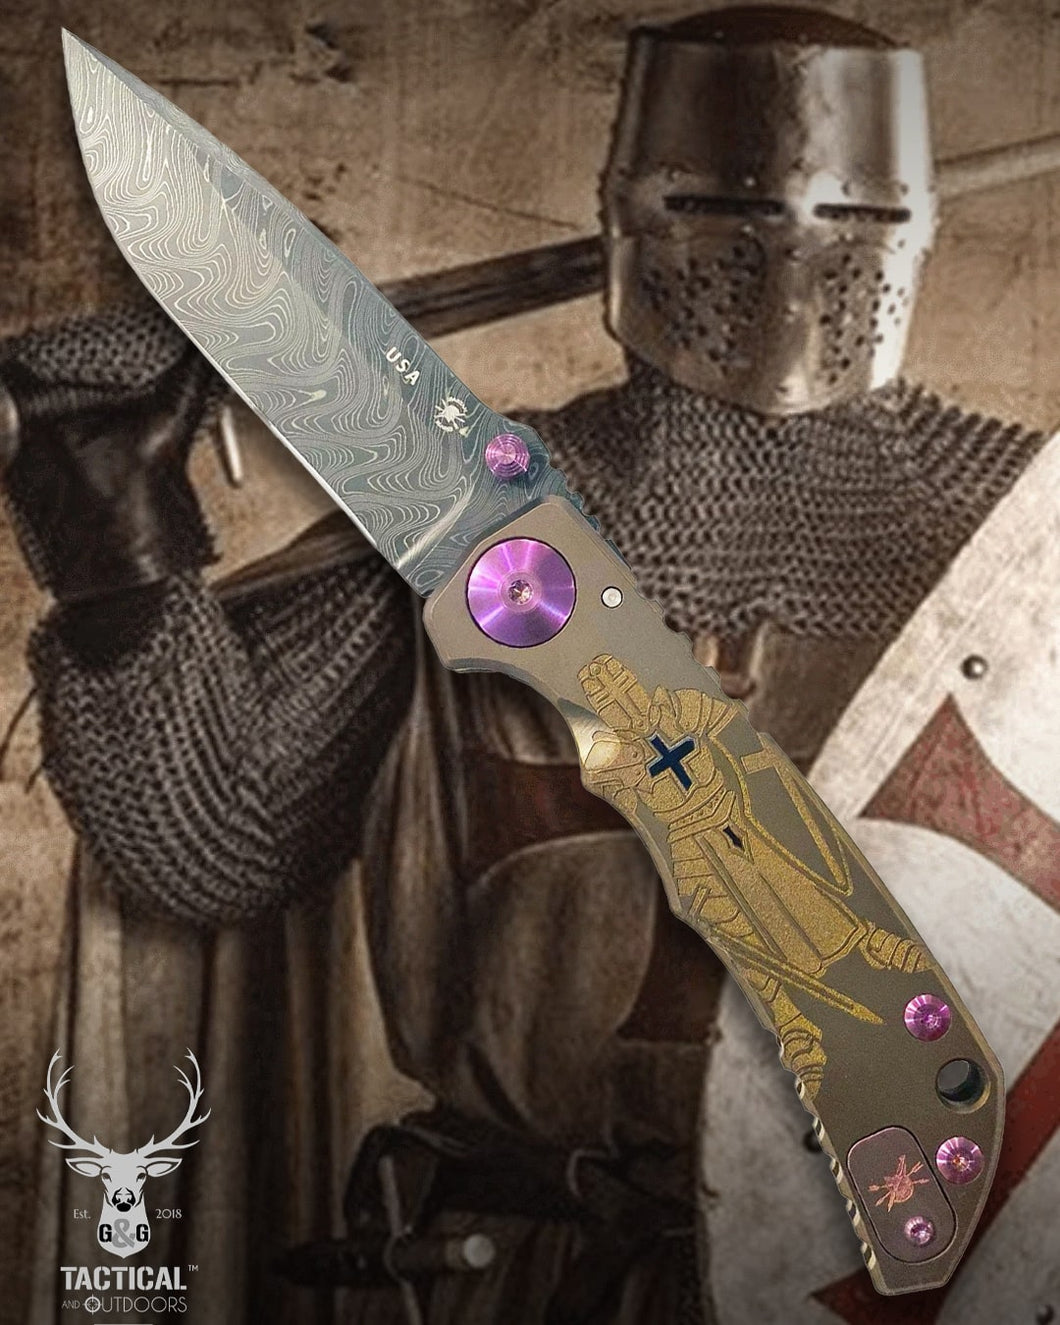 Spartan Blades Harsey Folder - Crusader Theme, Chad Nichols Damascus Blade, Bronze Hardware Knife